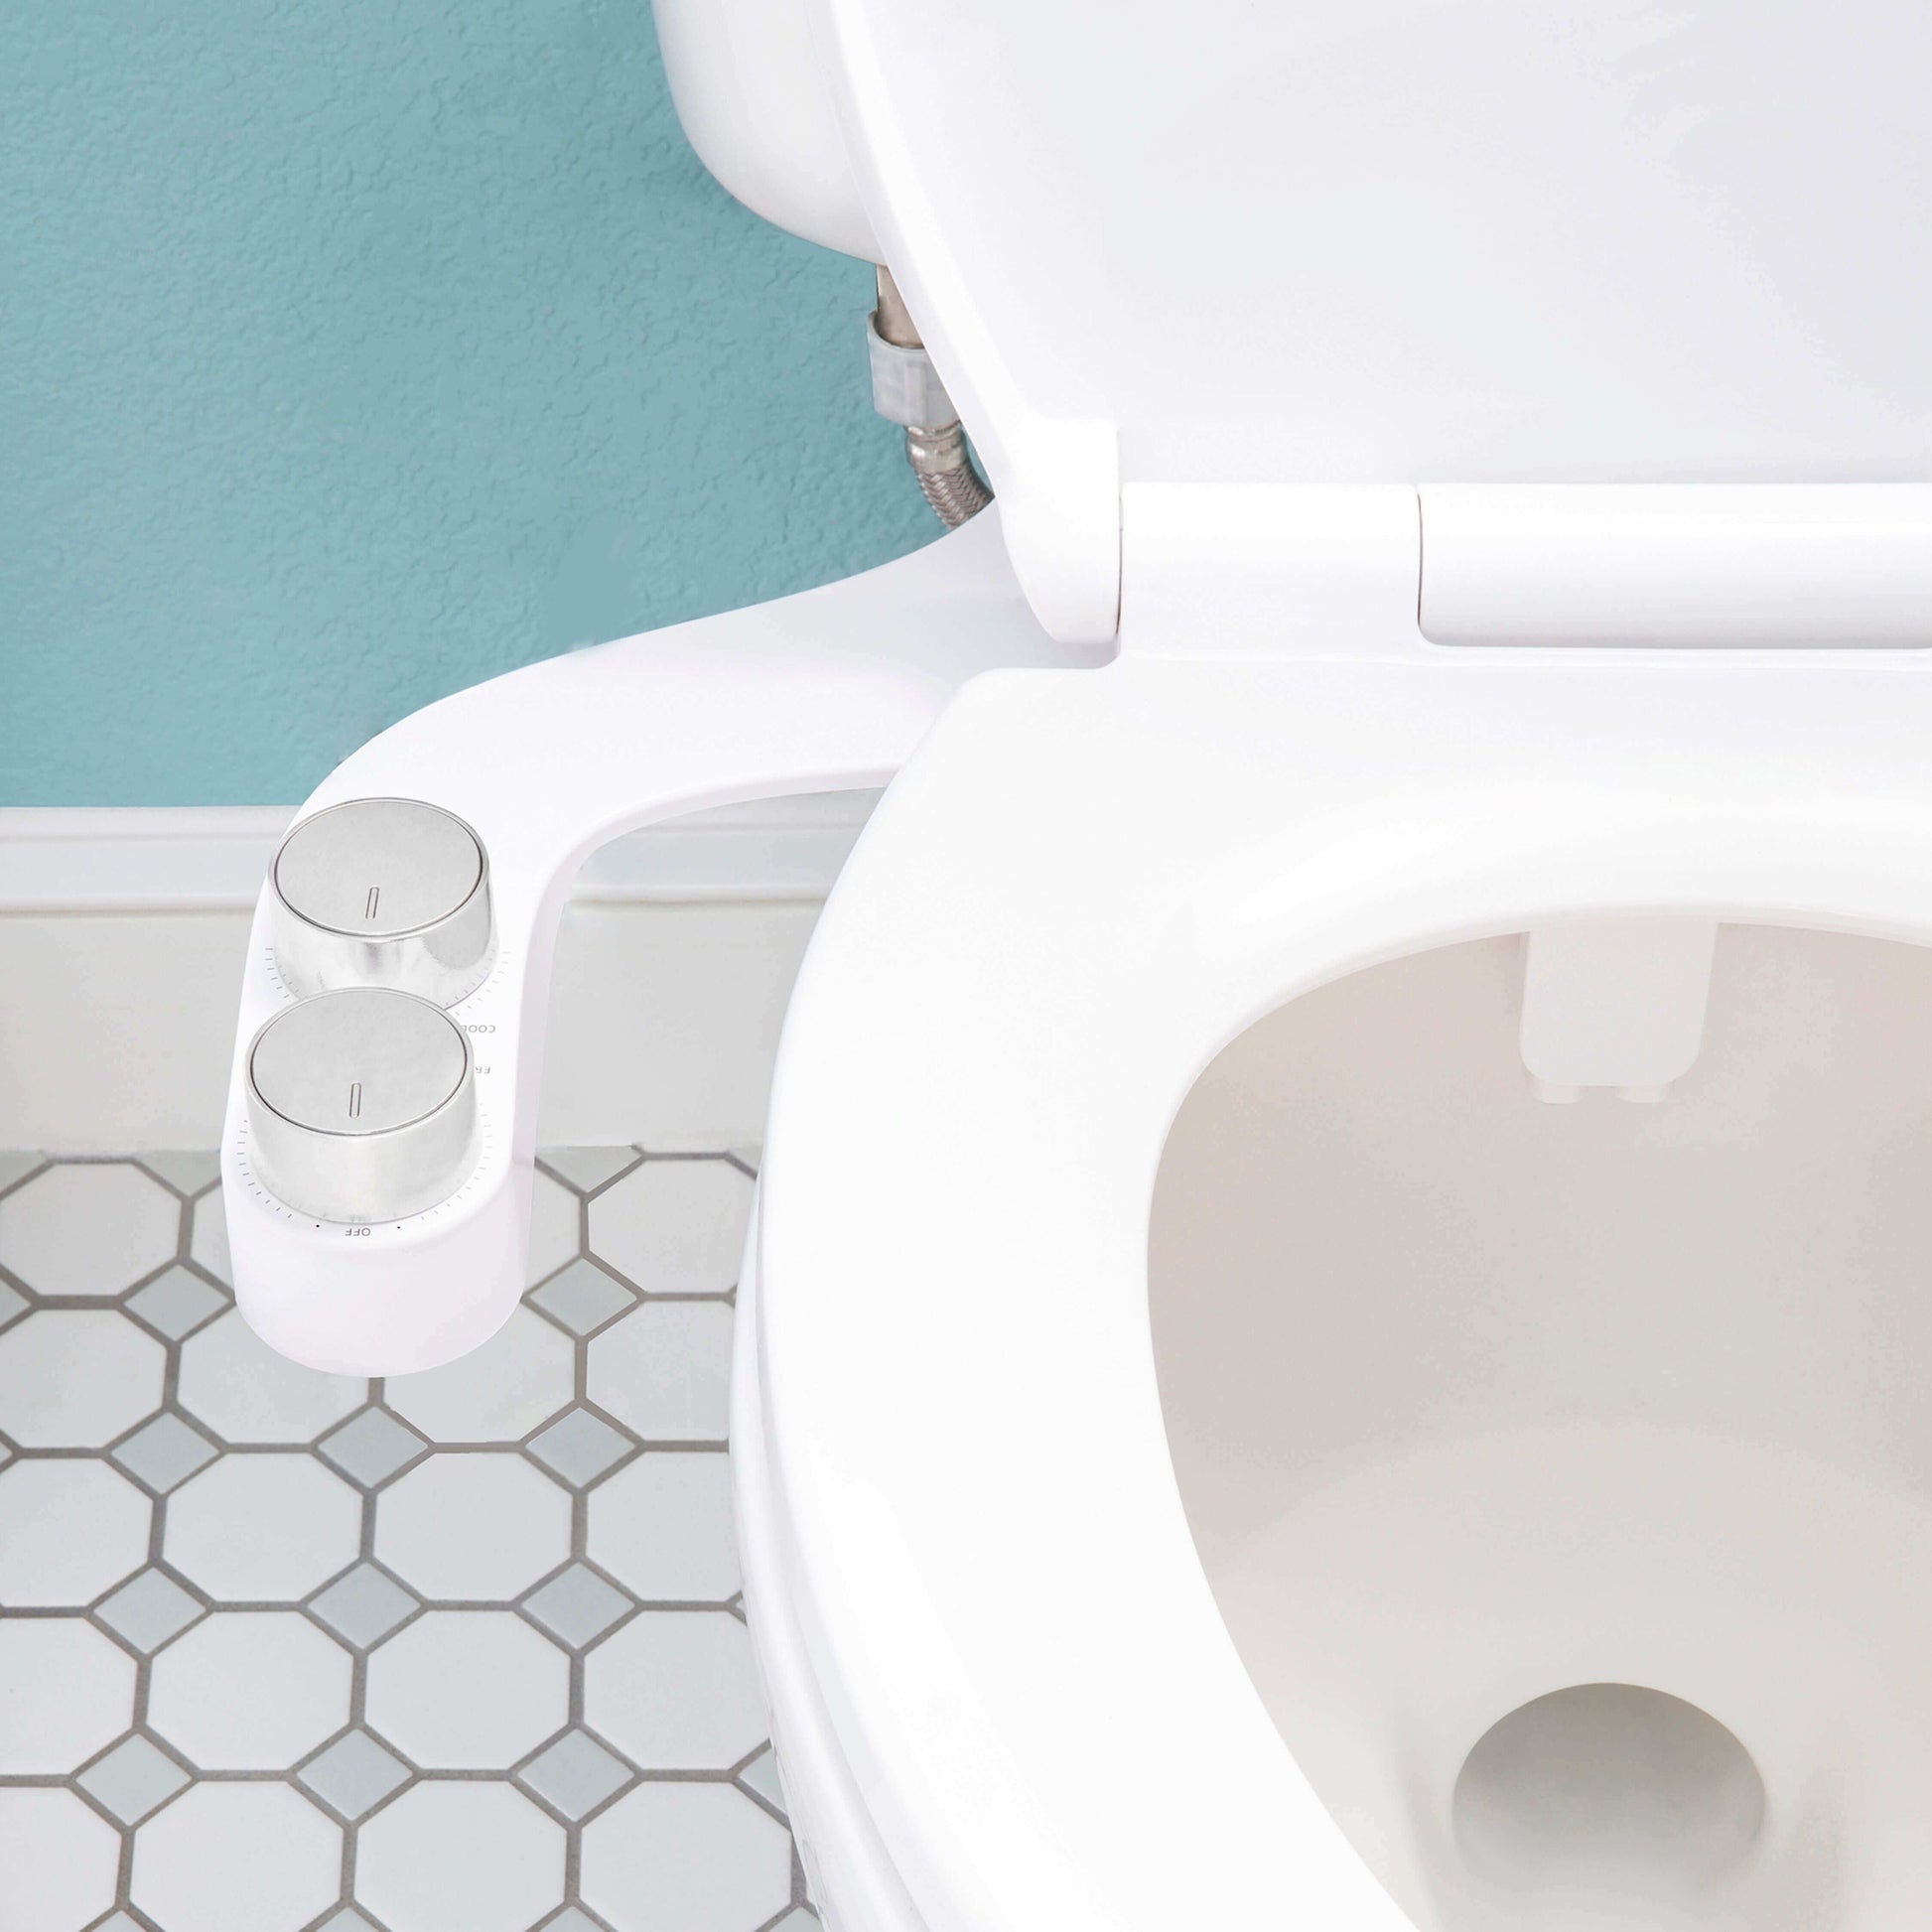 FreshSpa Comfort+ Bidet Attachment, Dual Temperature, Dual Nozzles - top view attached to toilet